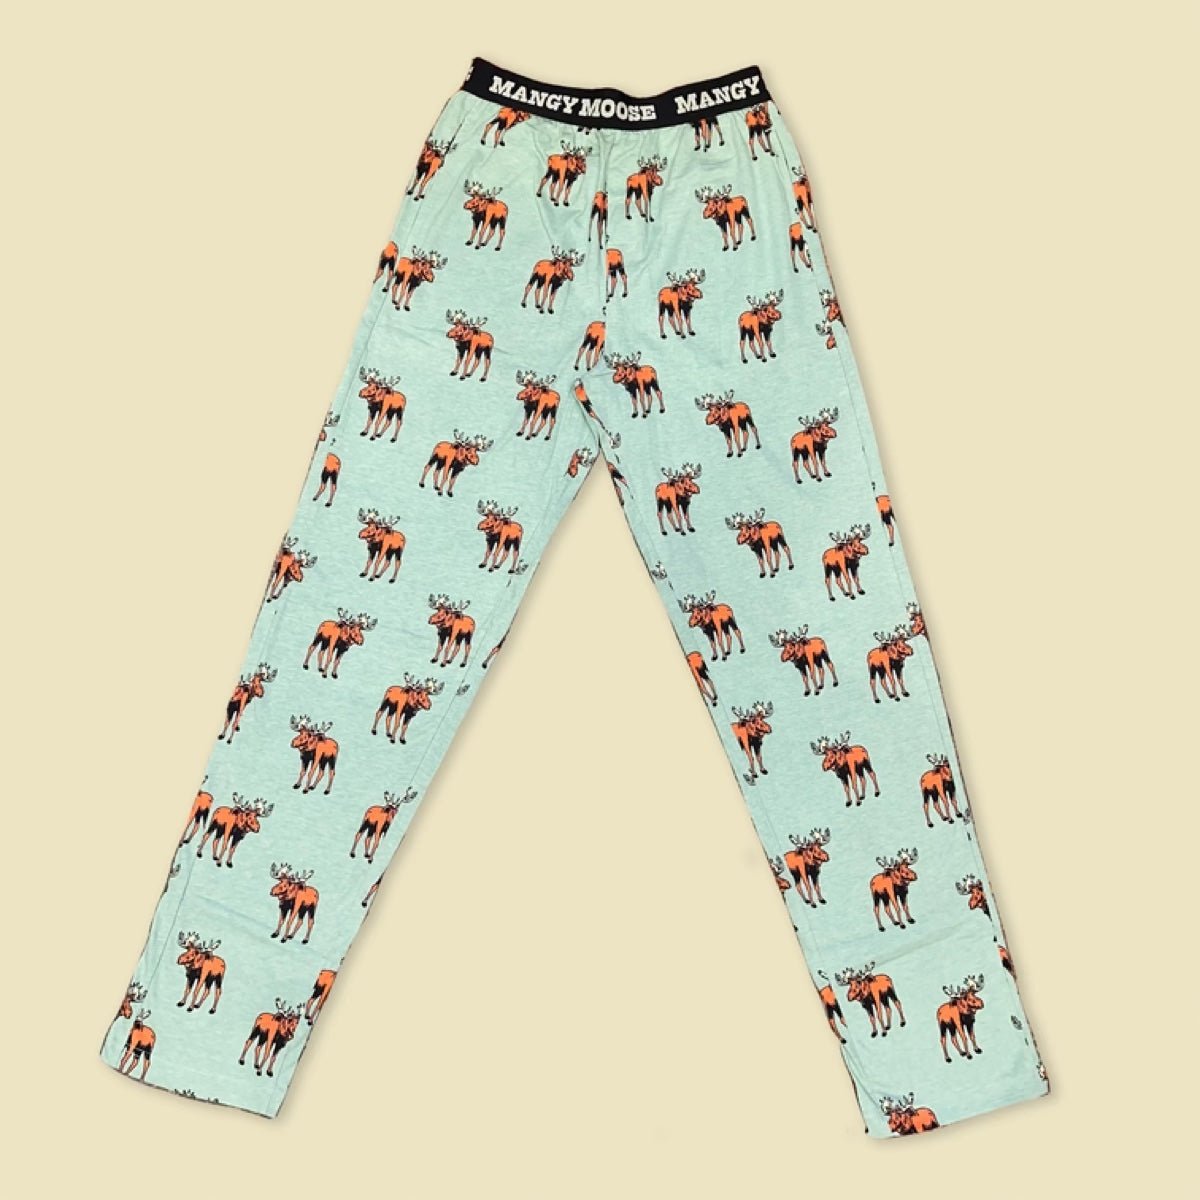 Mangy Moose Pajama Pants - Mangy Moose